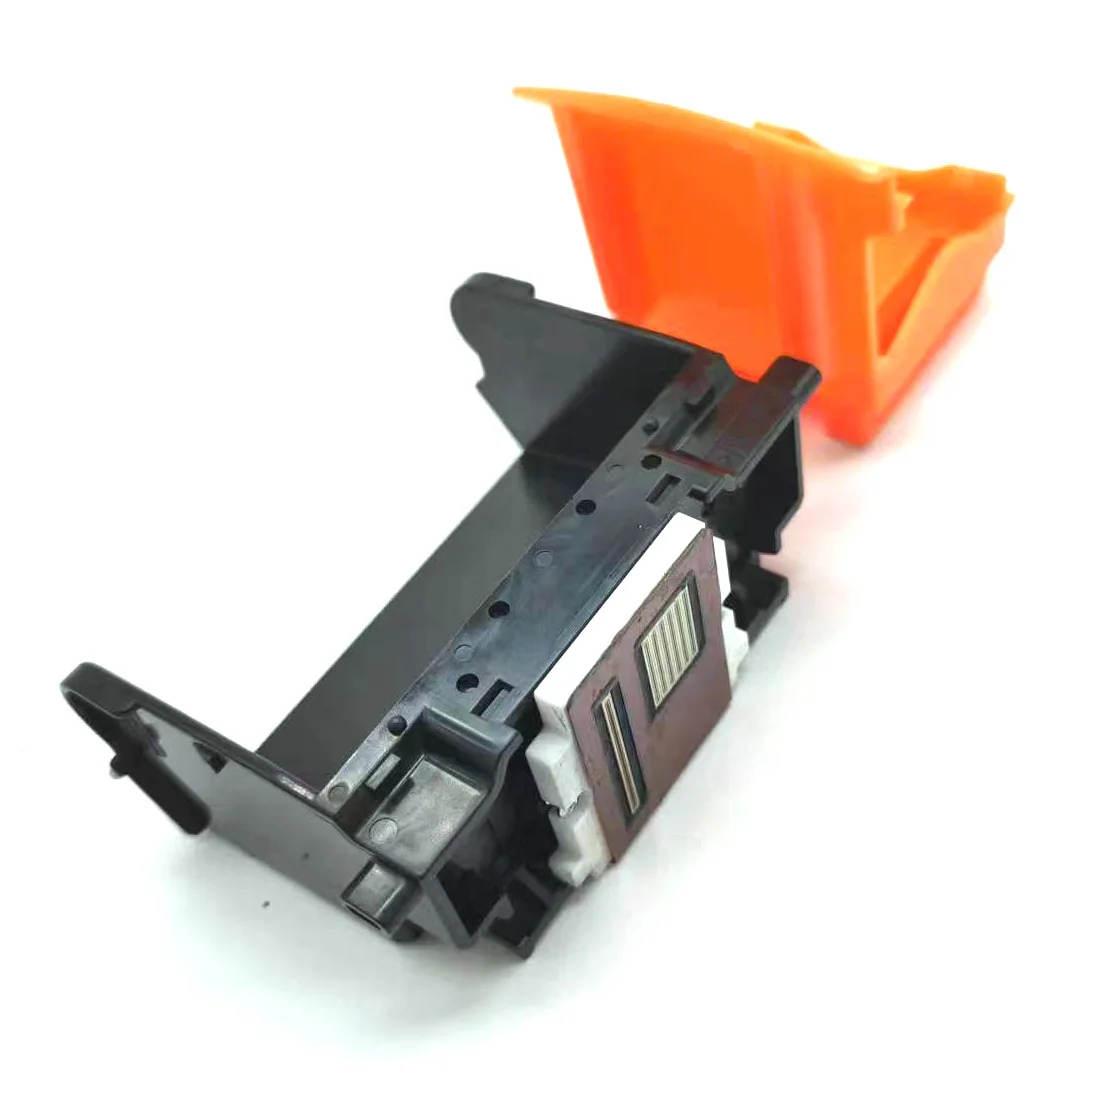 

Printhead Printer Nozzle QY6-0067 Fits For Canon MP610 MP810 IP5300 IP4500 MX850